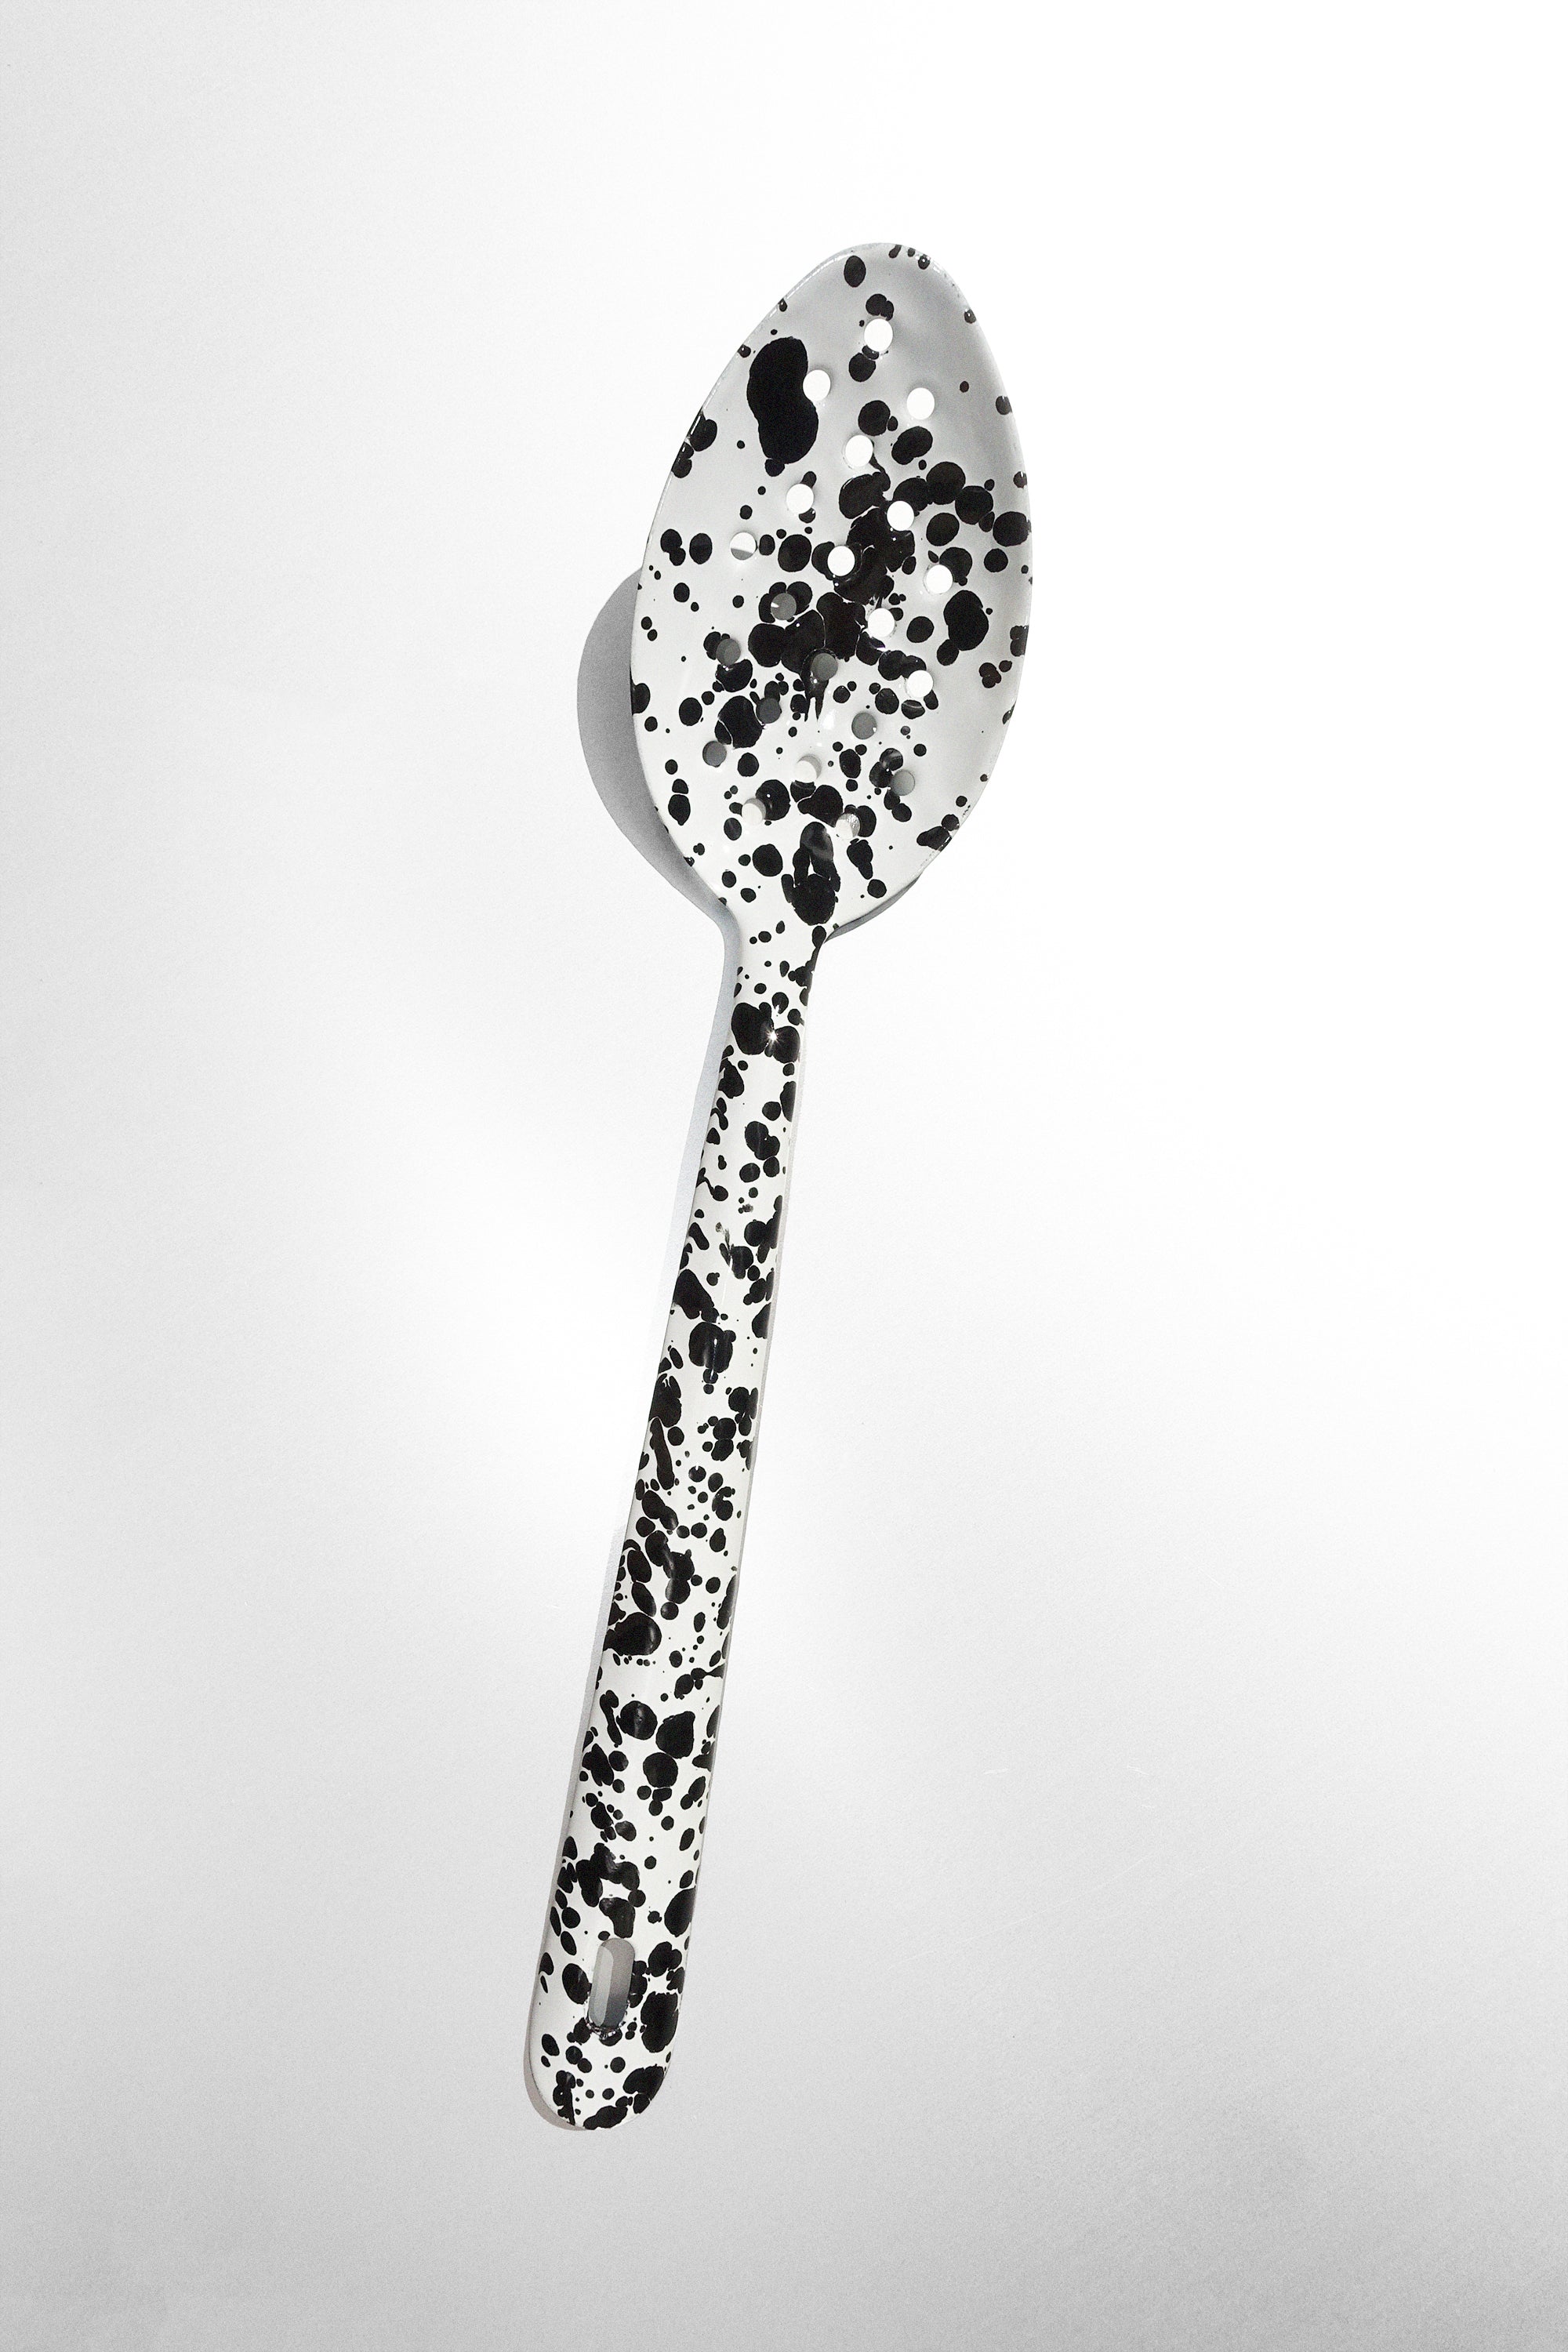 Large Slotted Spoon in Black Splatter